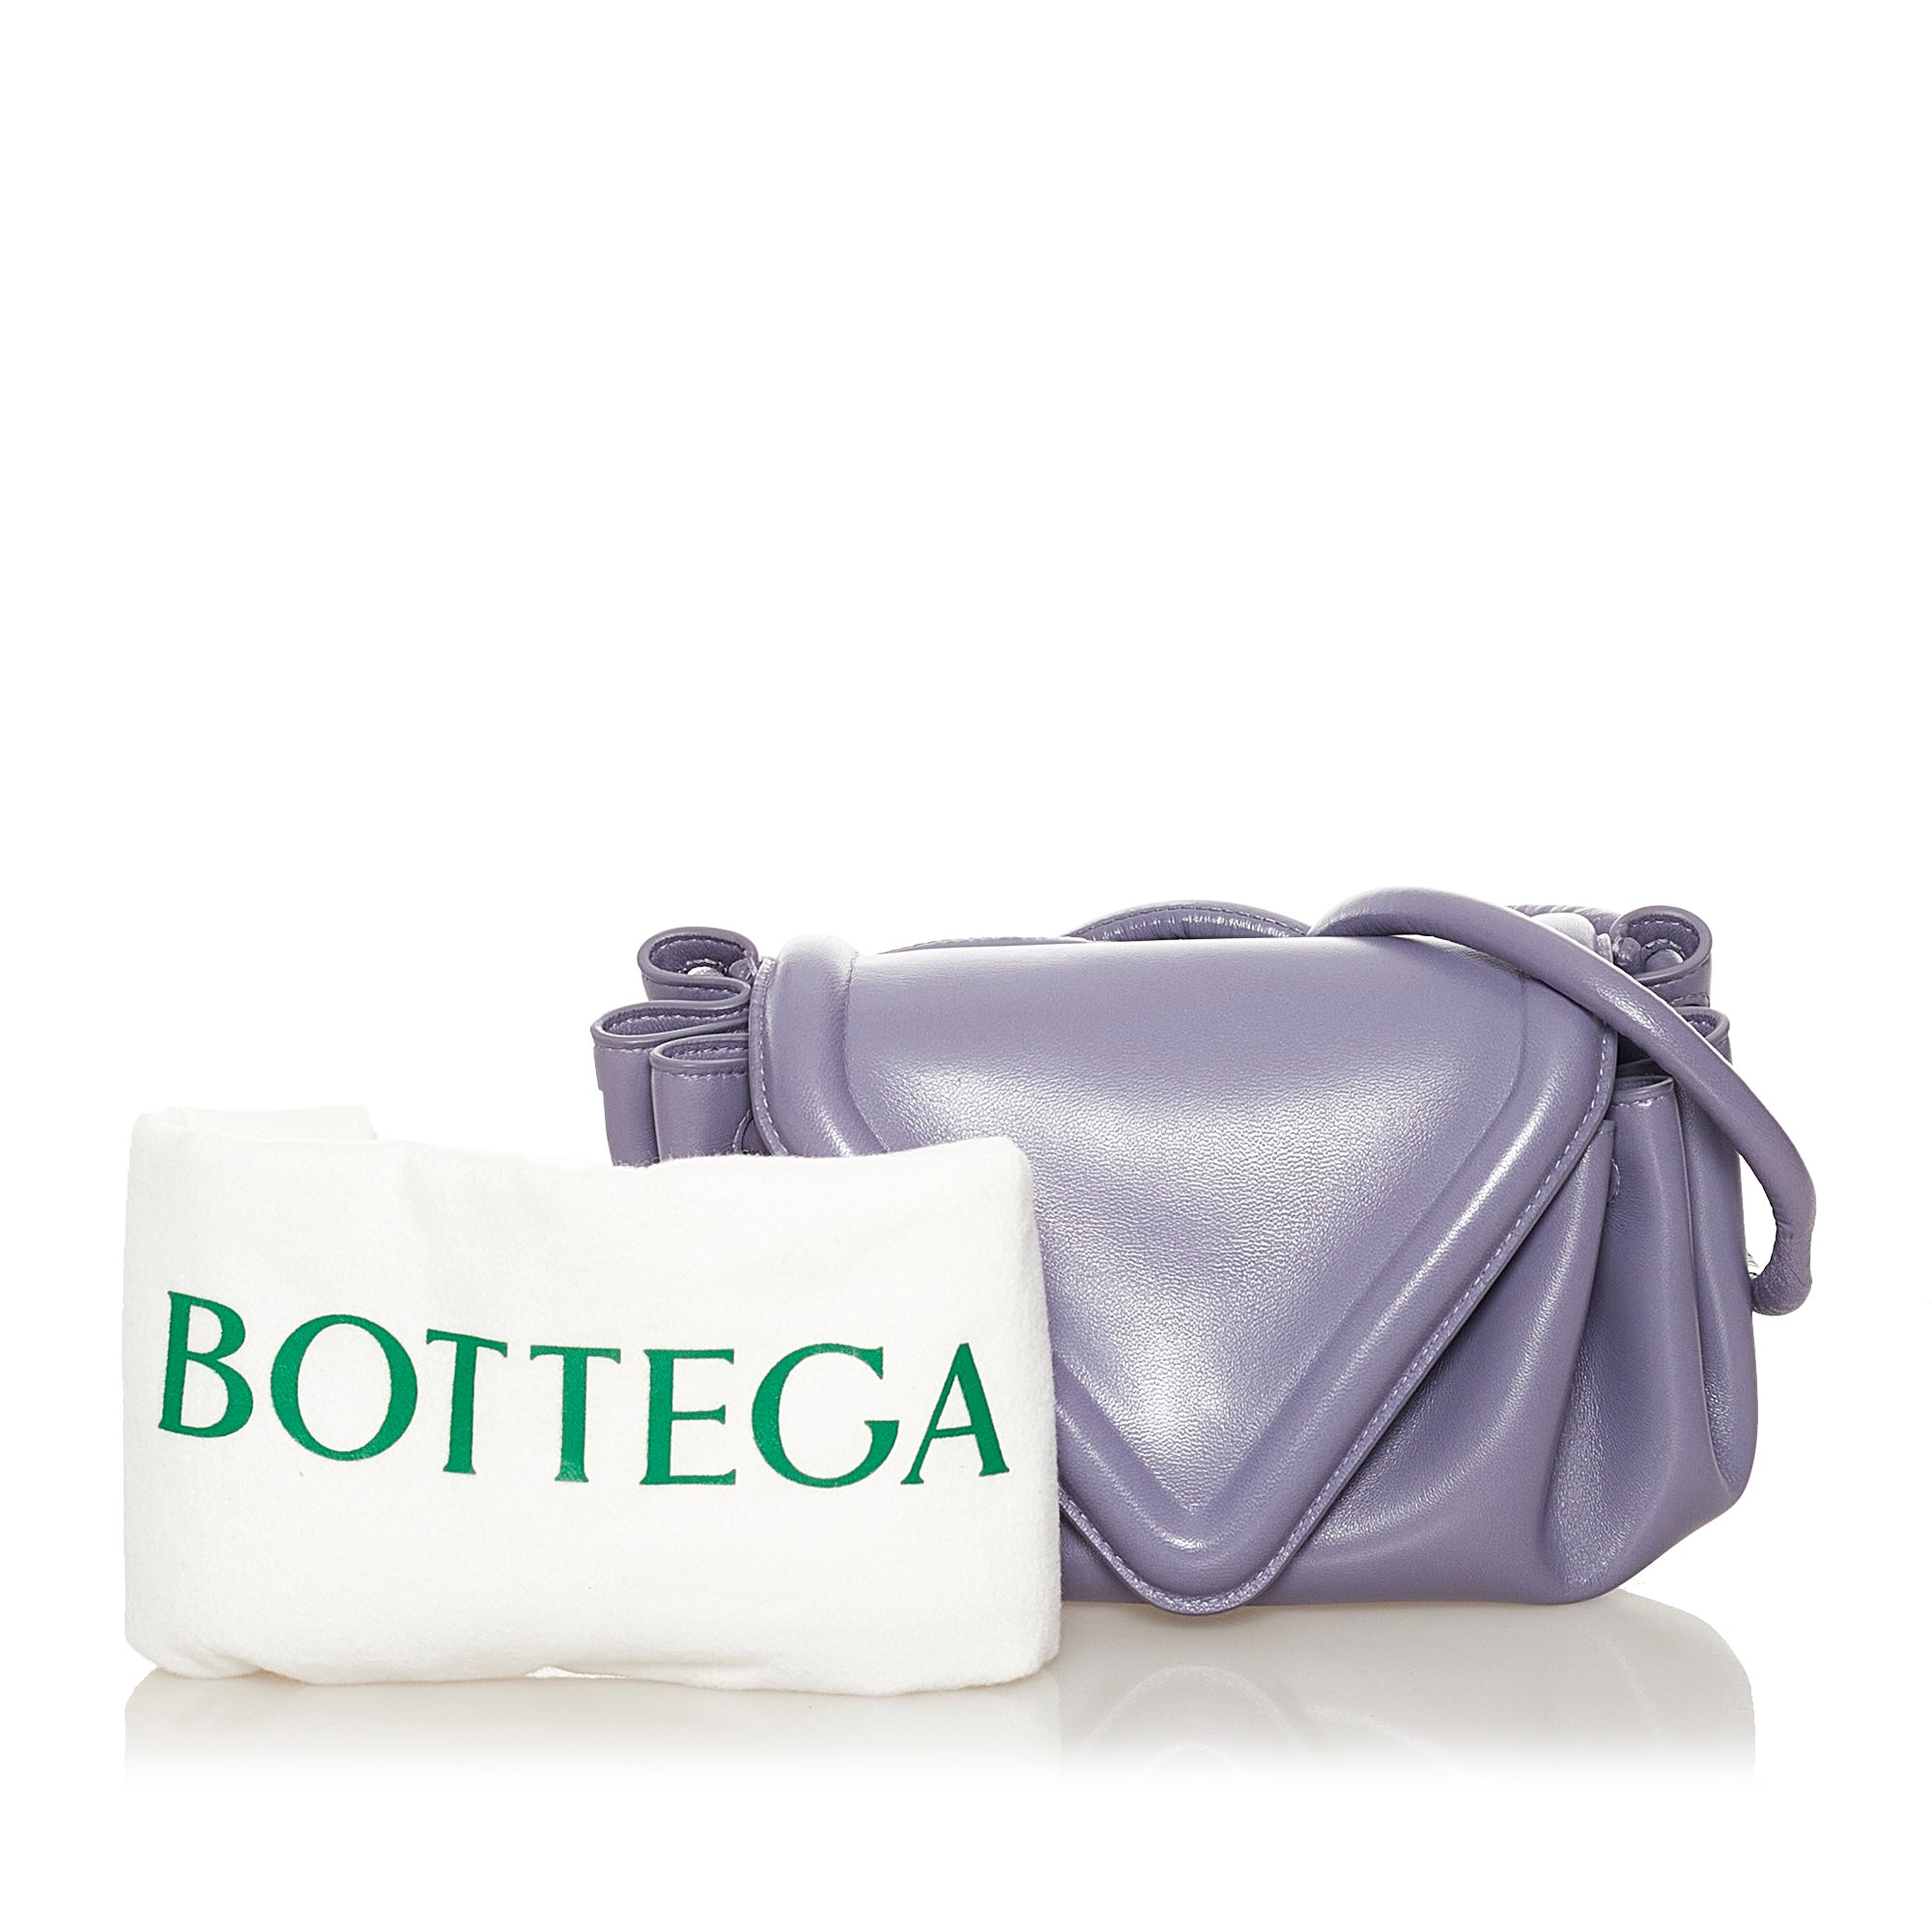 Bottega Veneta - Authenticated Loop Handbag - Leather Blue Plain for Women, Very Good Condition